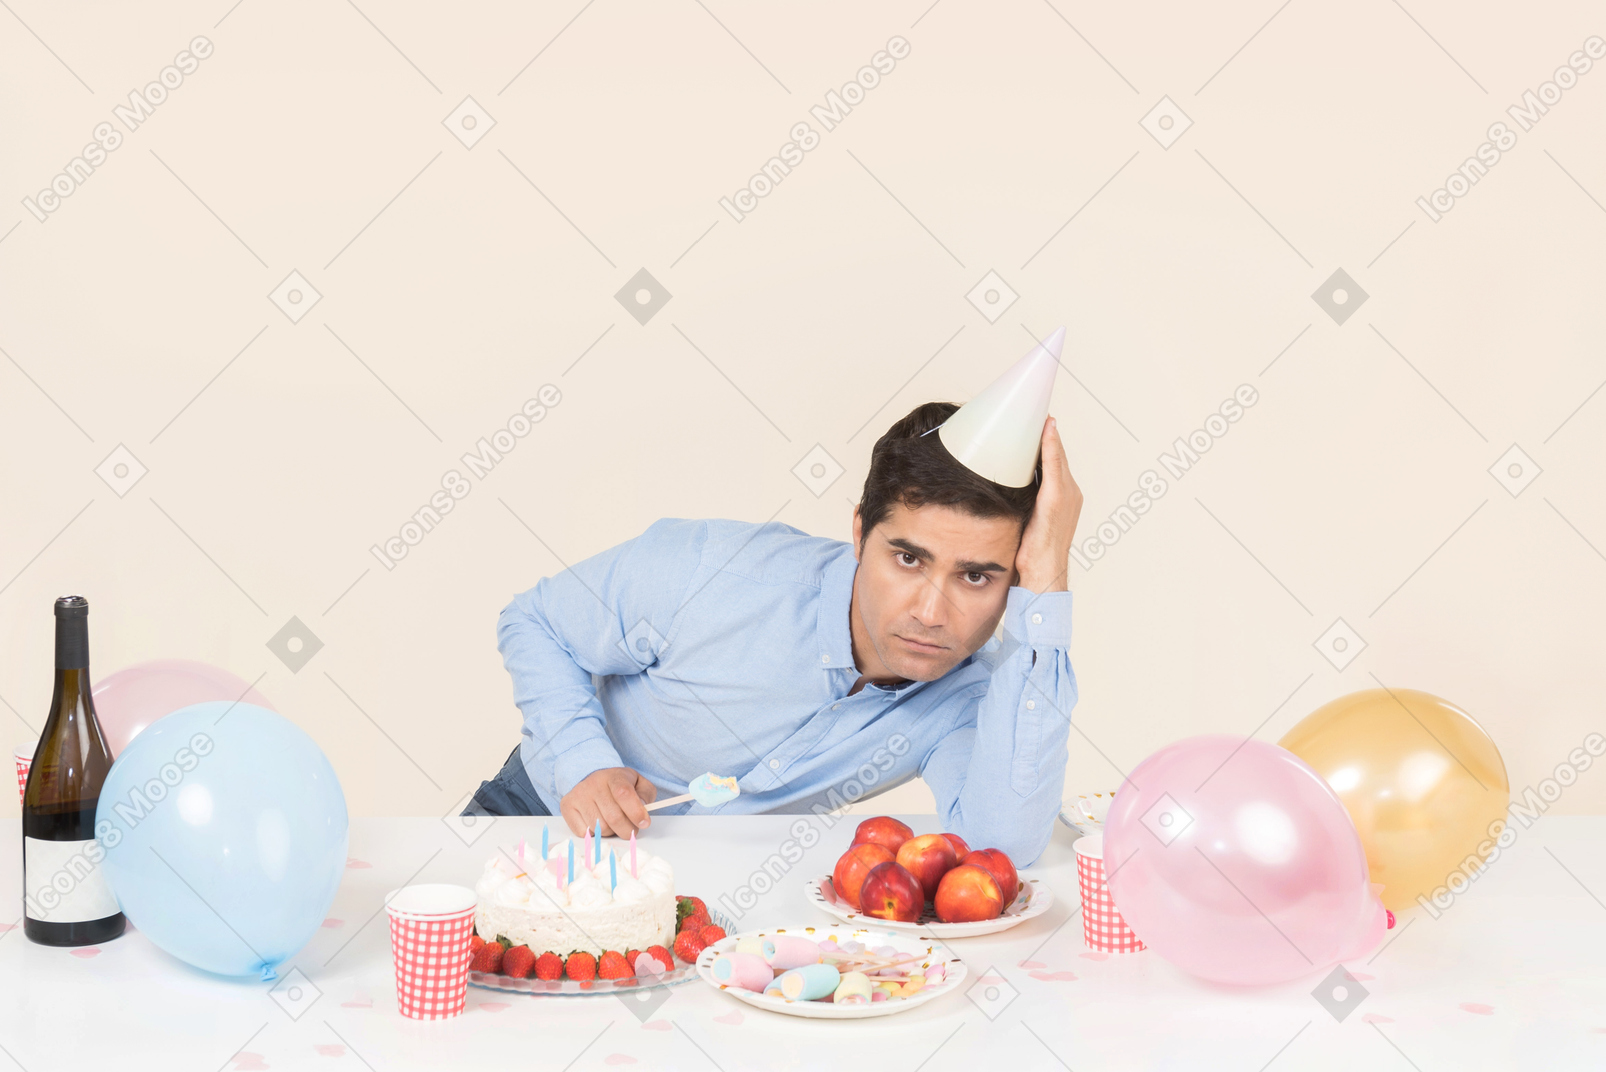 Sad looking young man sitting at birthday table